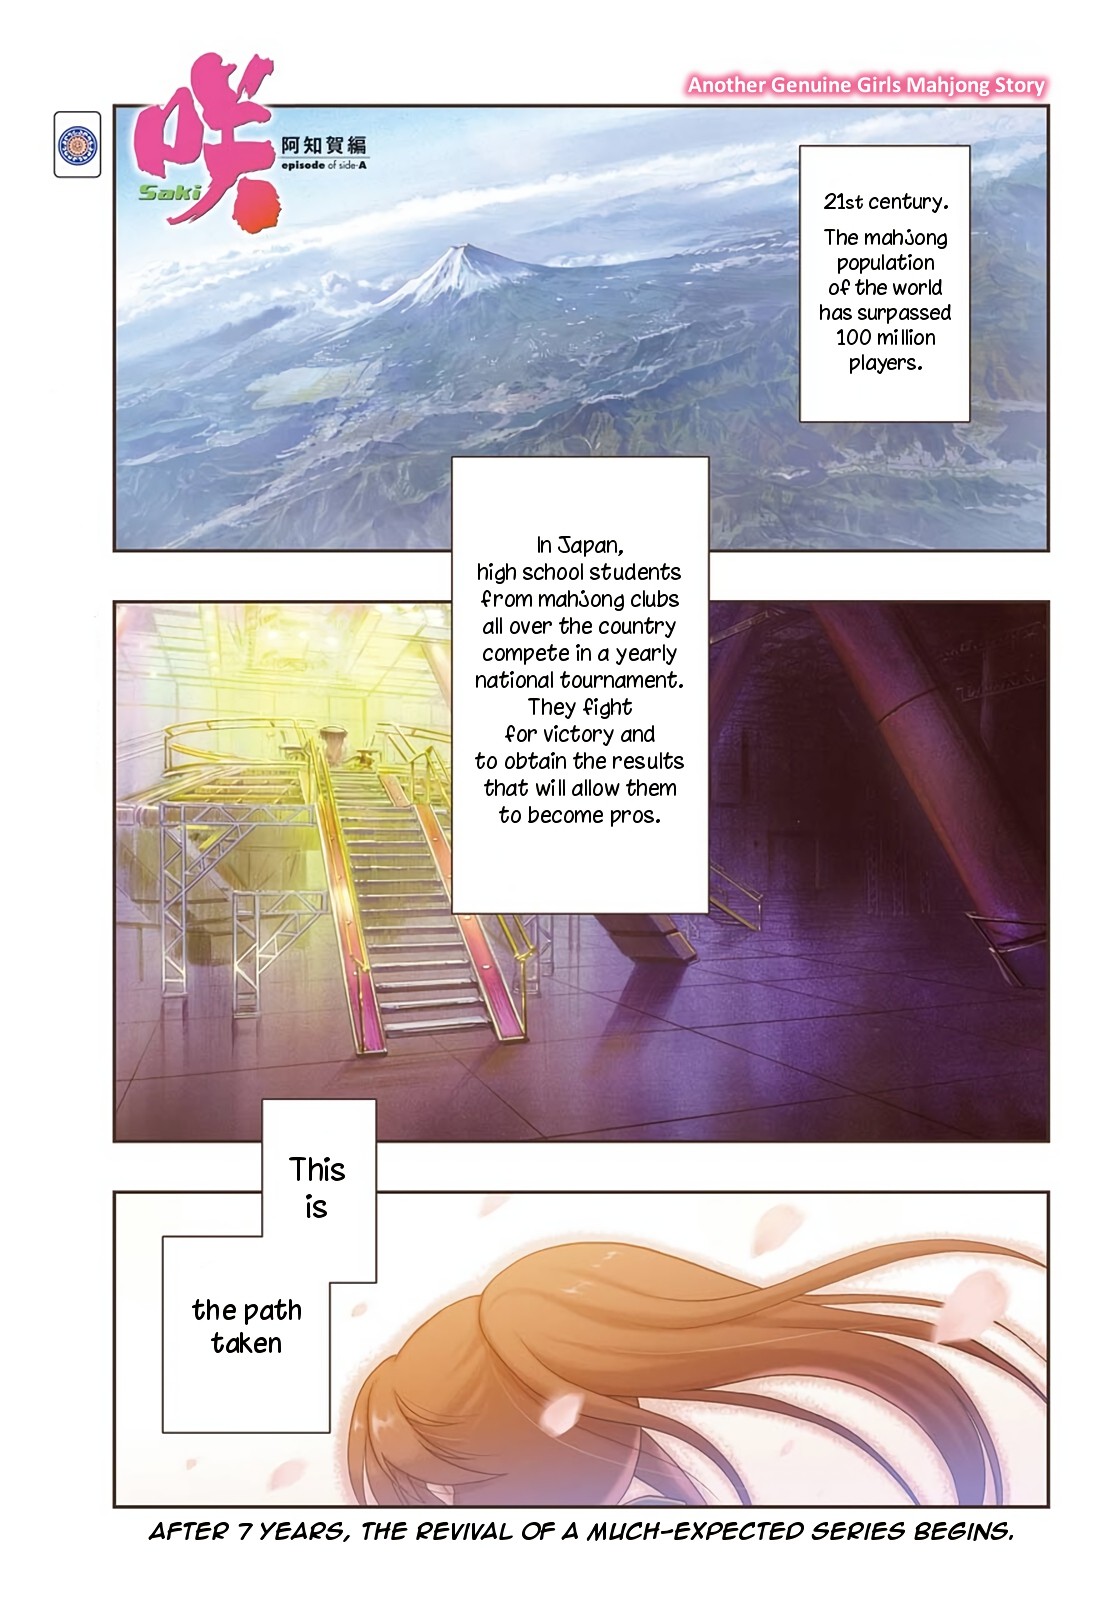 Saki: Achiga-Hen - Episode Of Side-A - New Series - Page 4